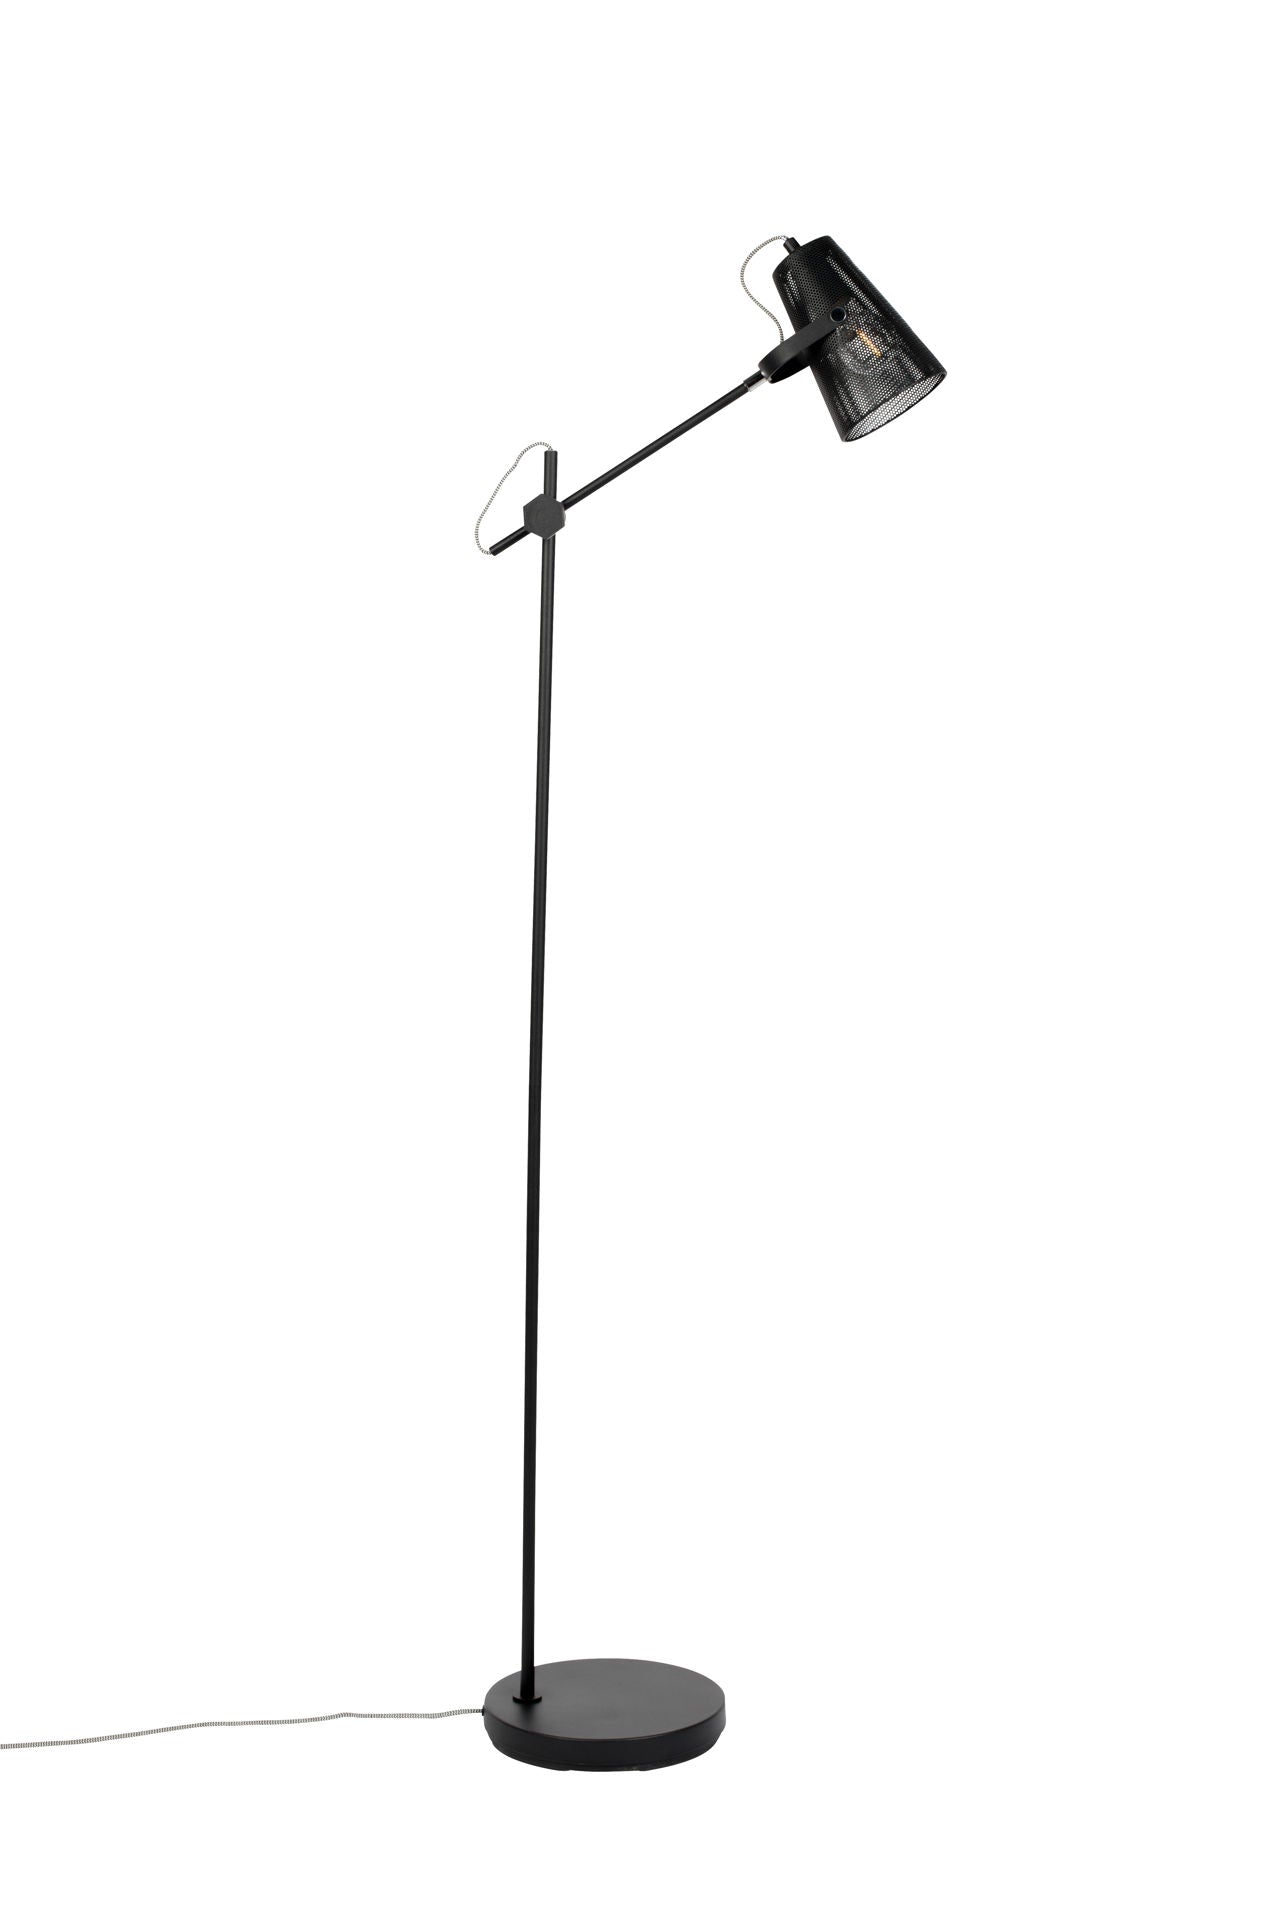 Nancy's Maili Vloerlamp - Modern - Zwart, Grijs - IJzer, Polyester - 41 cm x 25 cm x 135,5 cm